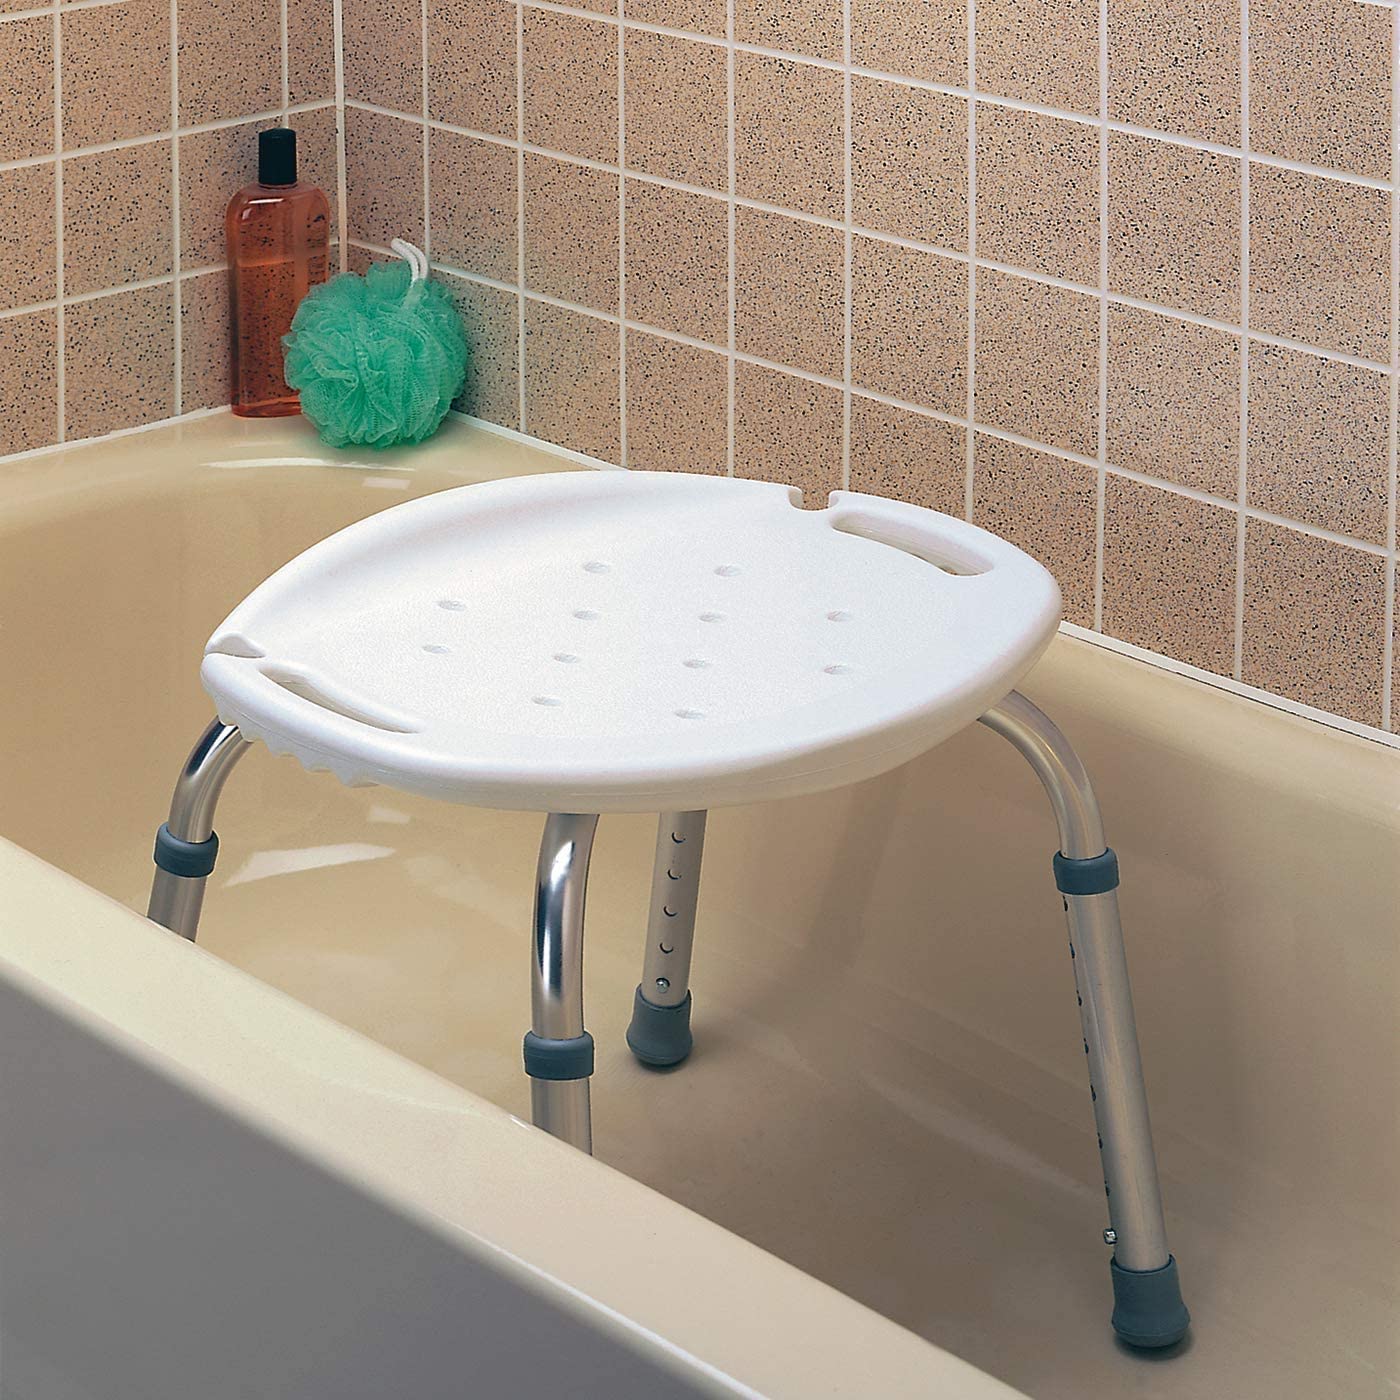 The Carex Adjustable Bath & Shower Seat in a bathtub